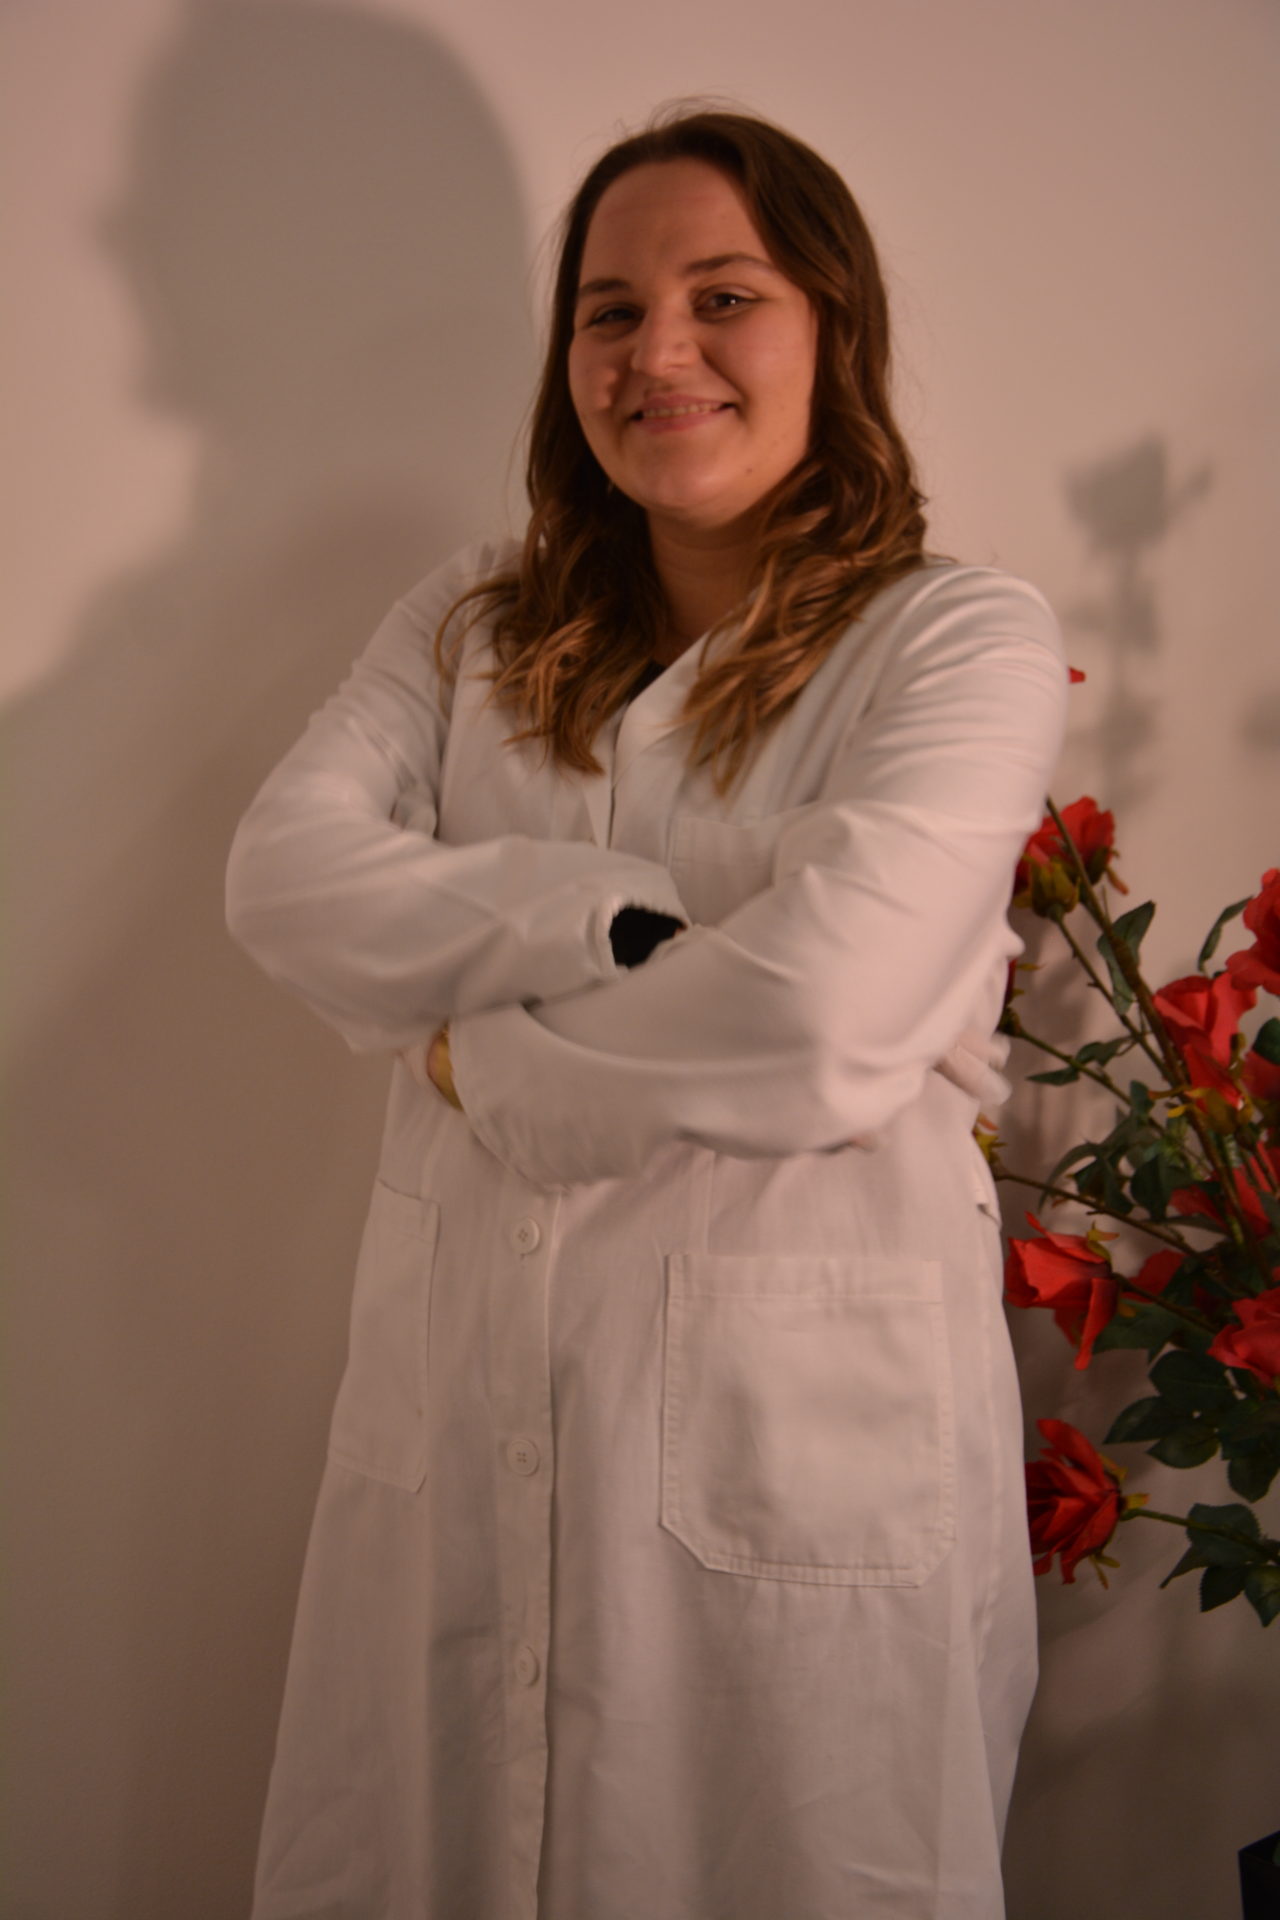 Chiara Volpato wears a lab coat